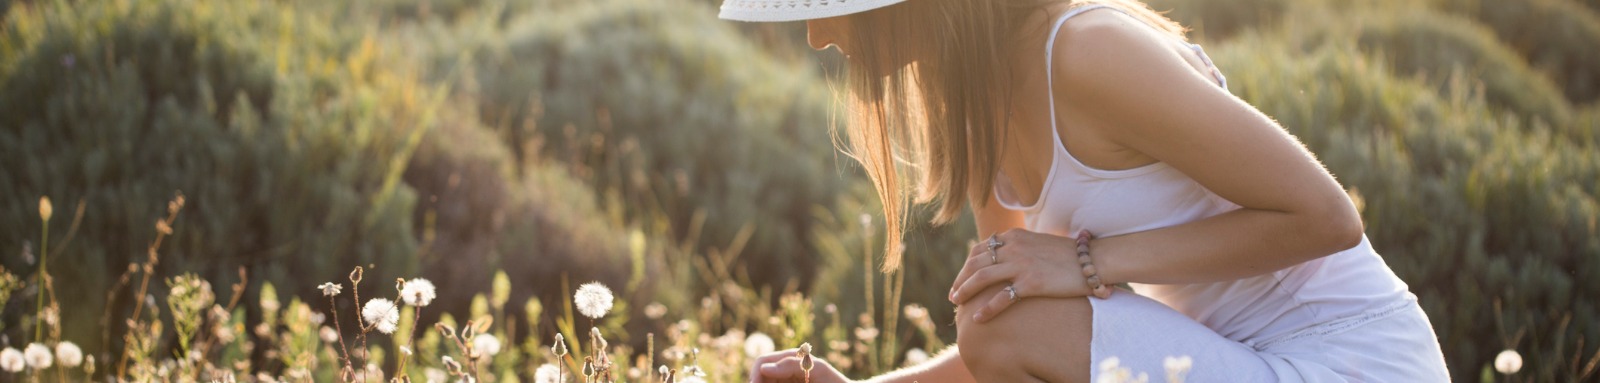 Woman wearing sunhat in a field picking flowers